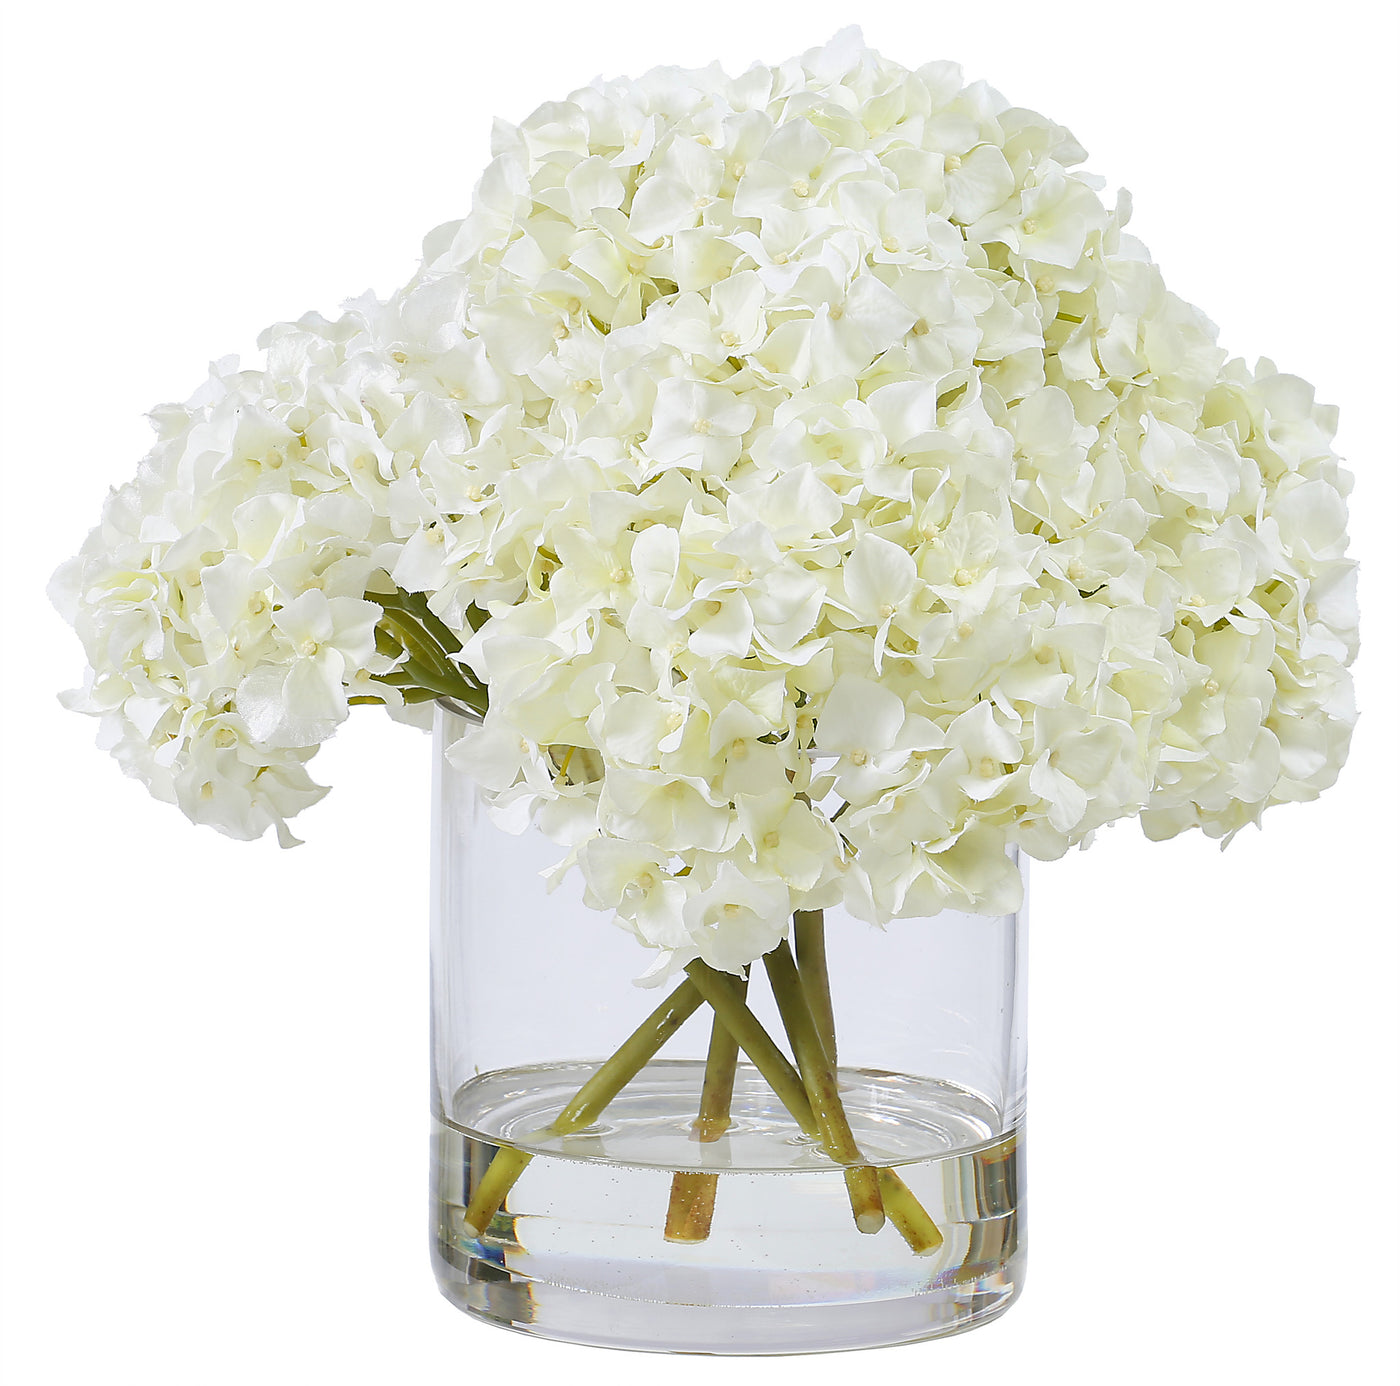 HYDRANGEAS IN GLASS 12'' (WHI007-WH) - Winward Home silk flower arrangements